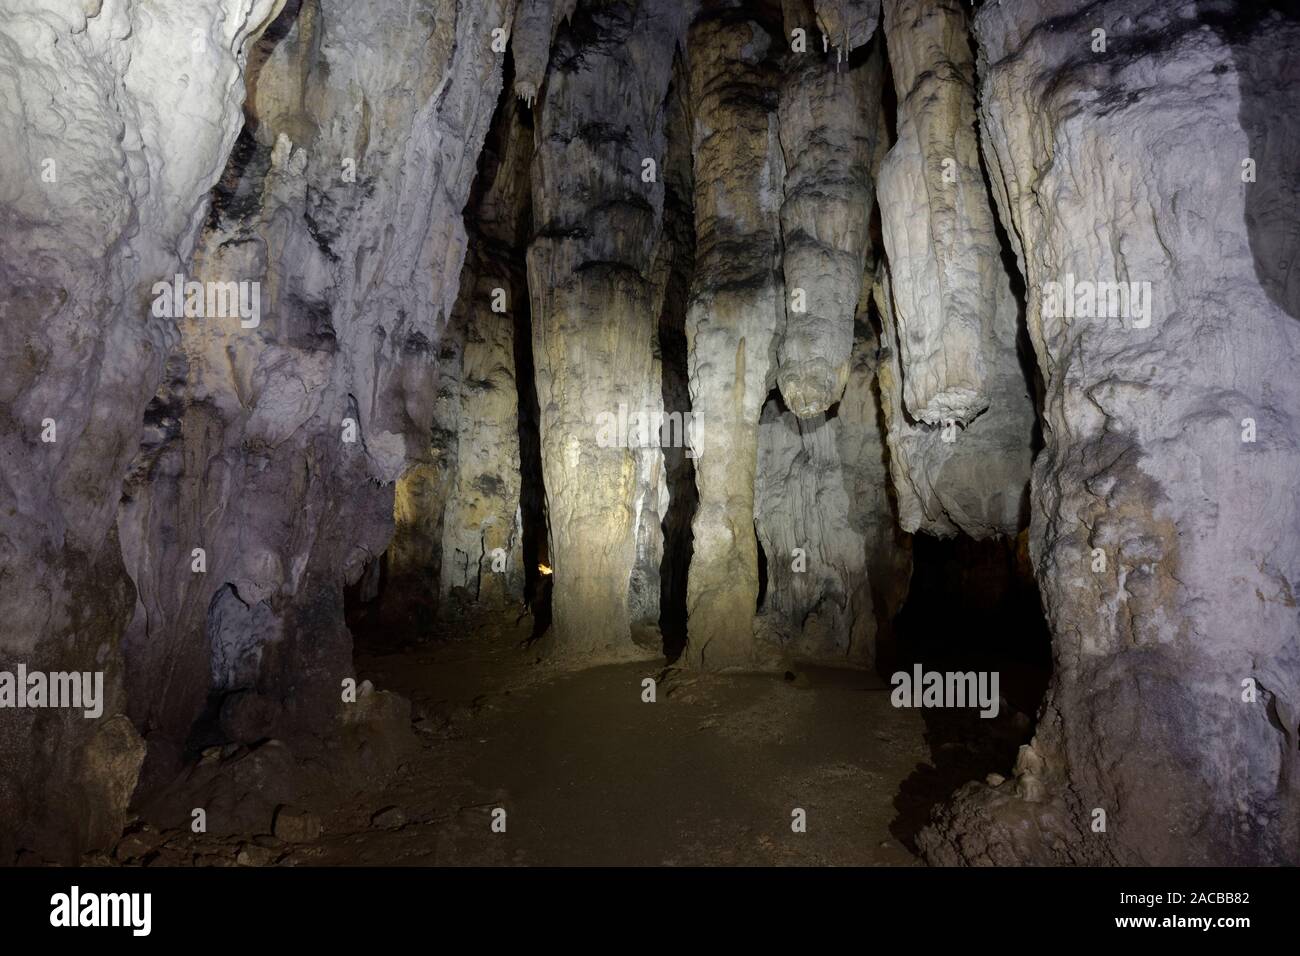 Barac caves near Plitvice Lakes, Croatia Stock Photo - Alamy